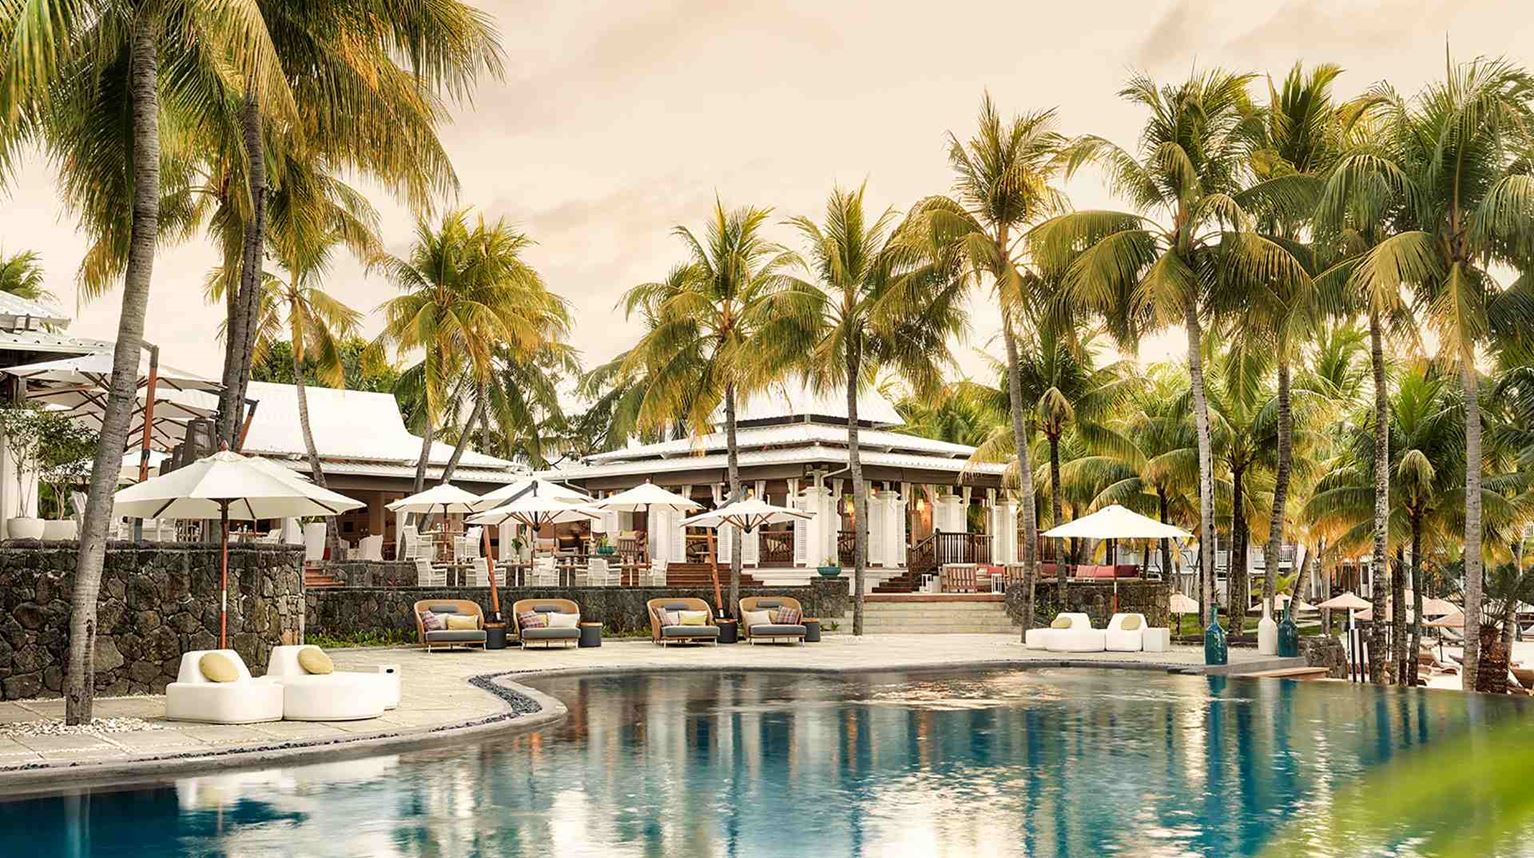 Rejser til Mauritius, Paradise Cove Boutique Hotel, Swimmingpoolen i haven